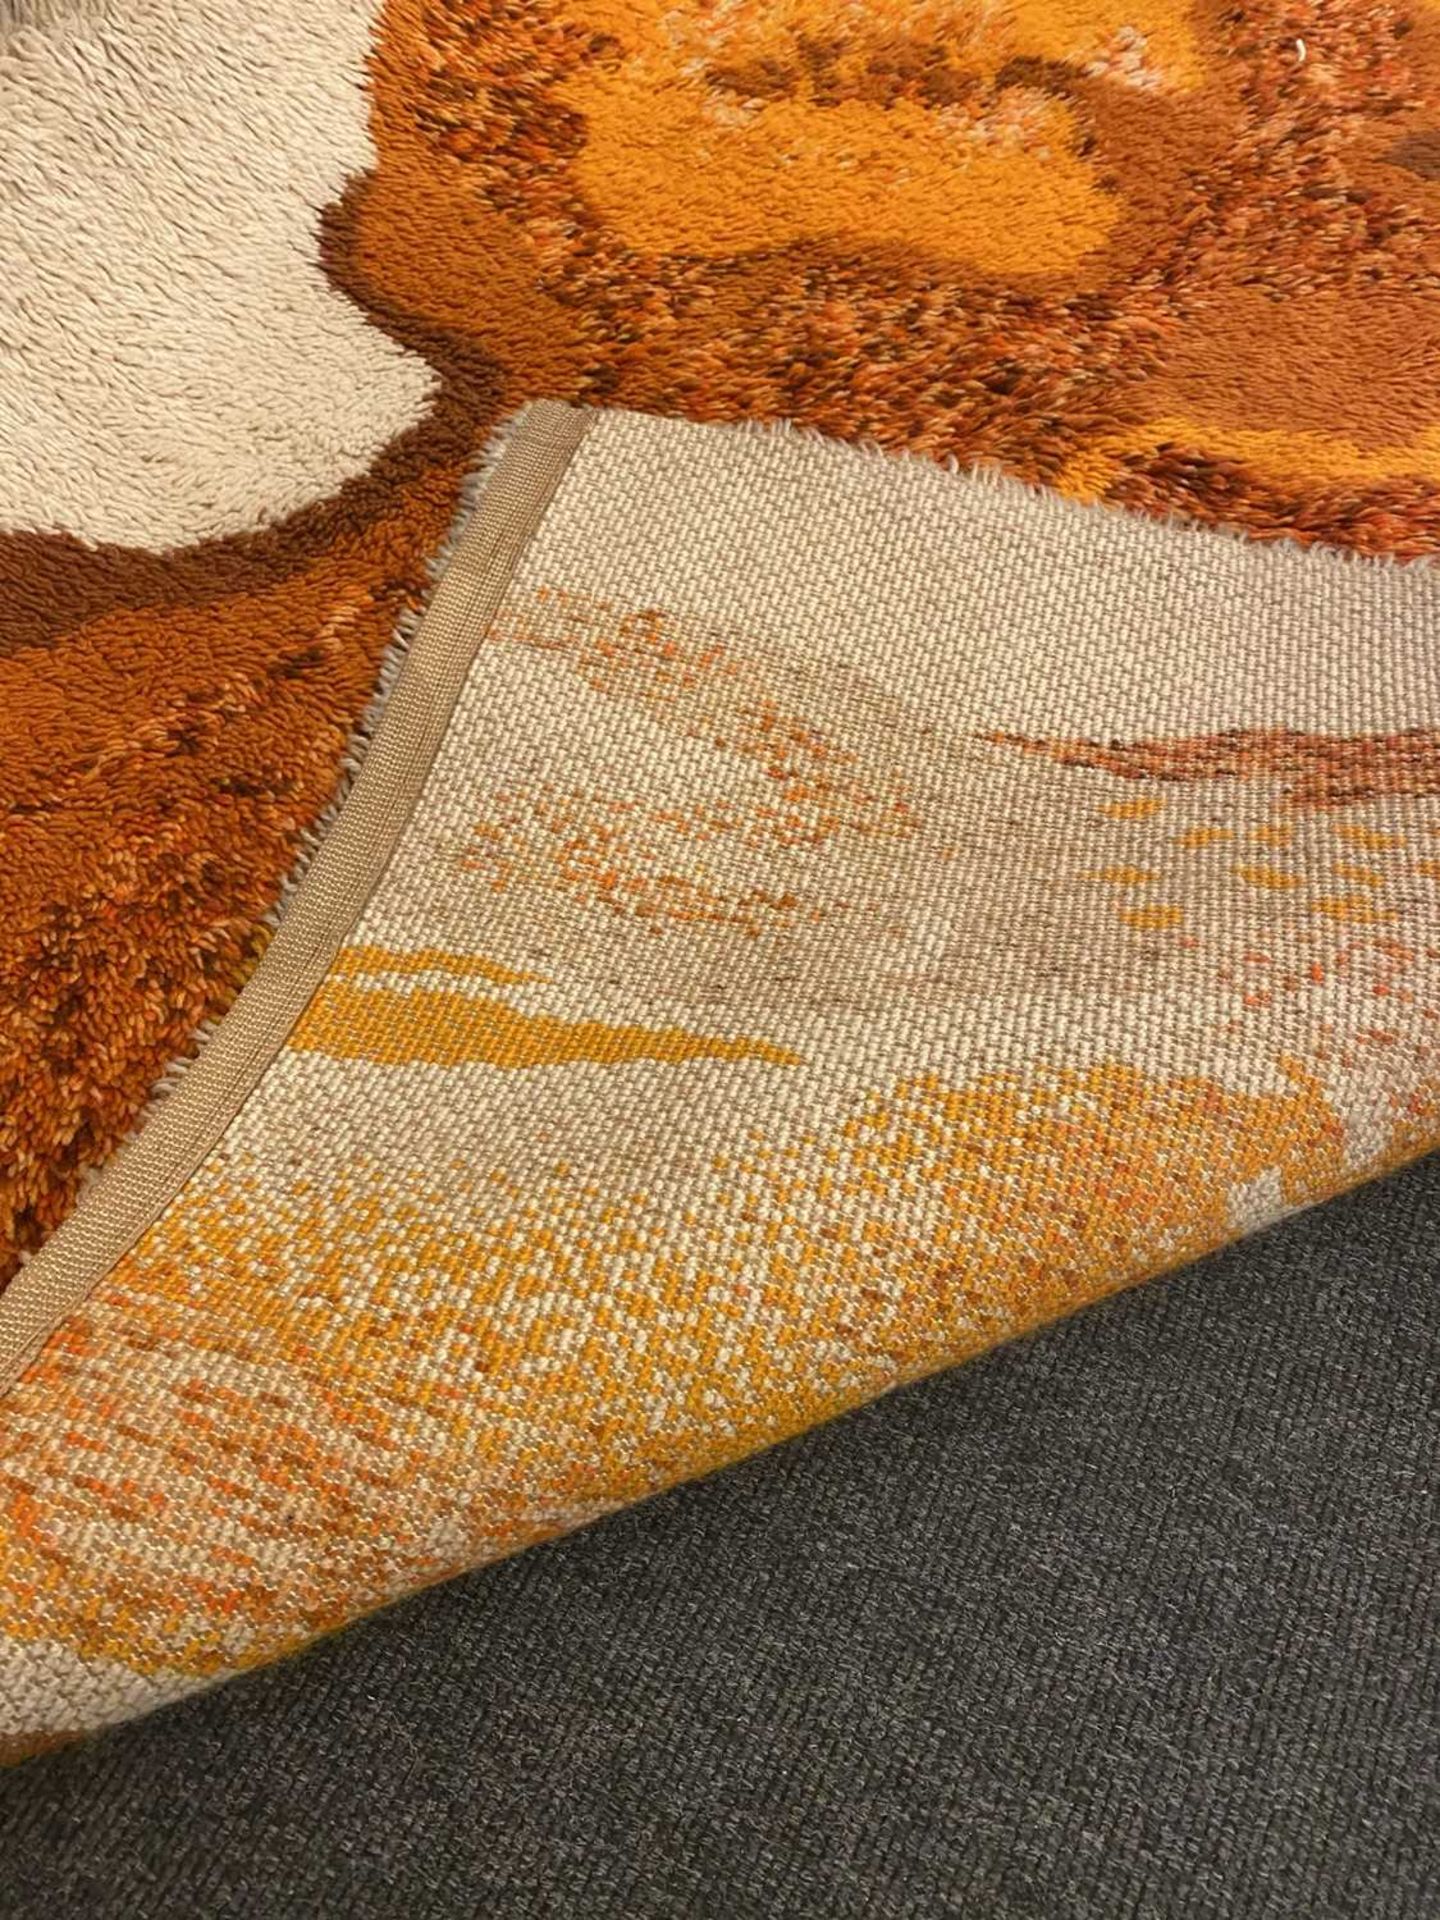 A Desso 'Rya' rug, - Image 6 of 7